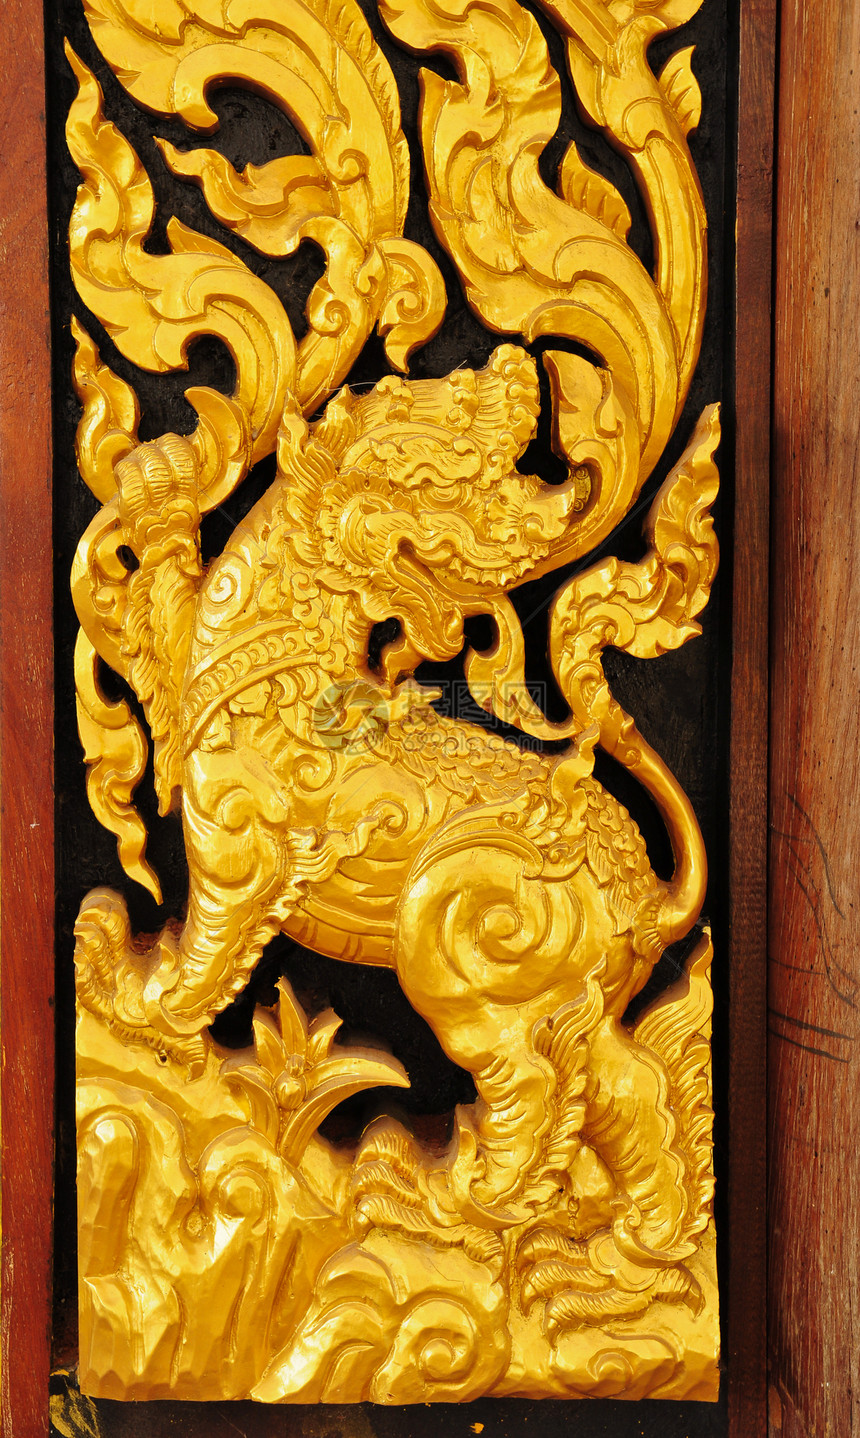 Laithai雕刻在寺庙的门上场景雕塑传统历史线条宗教头脑文化雕像佛教徒图片